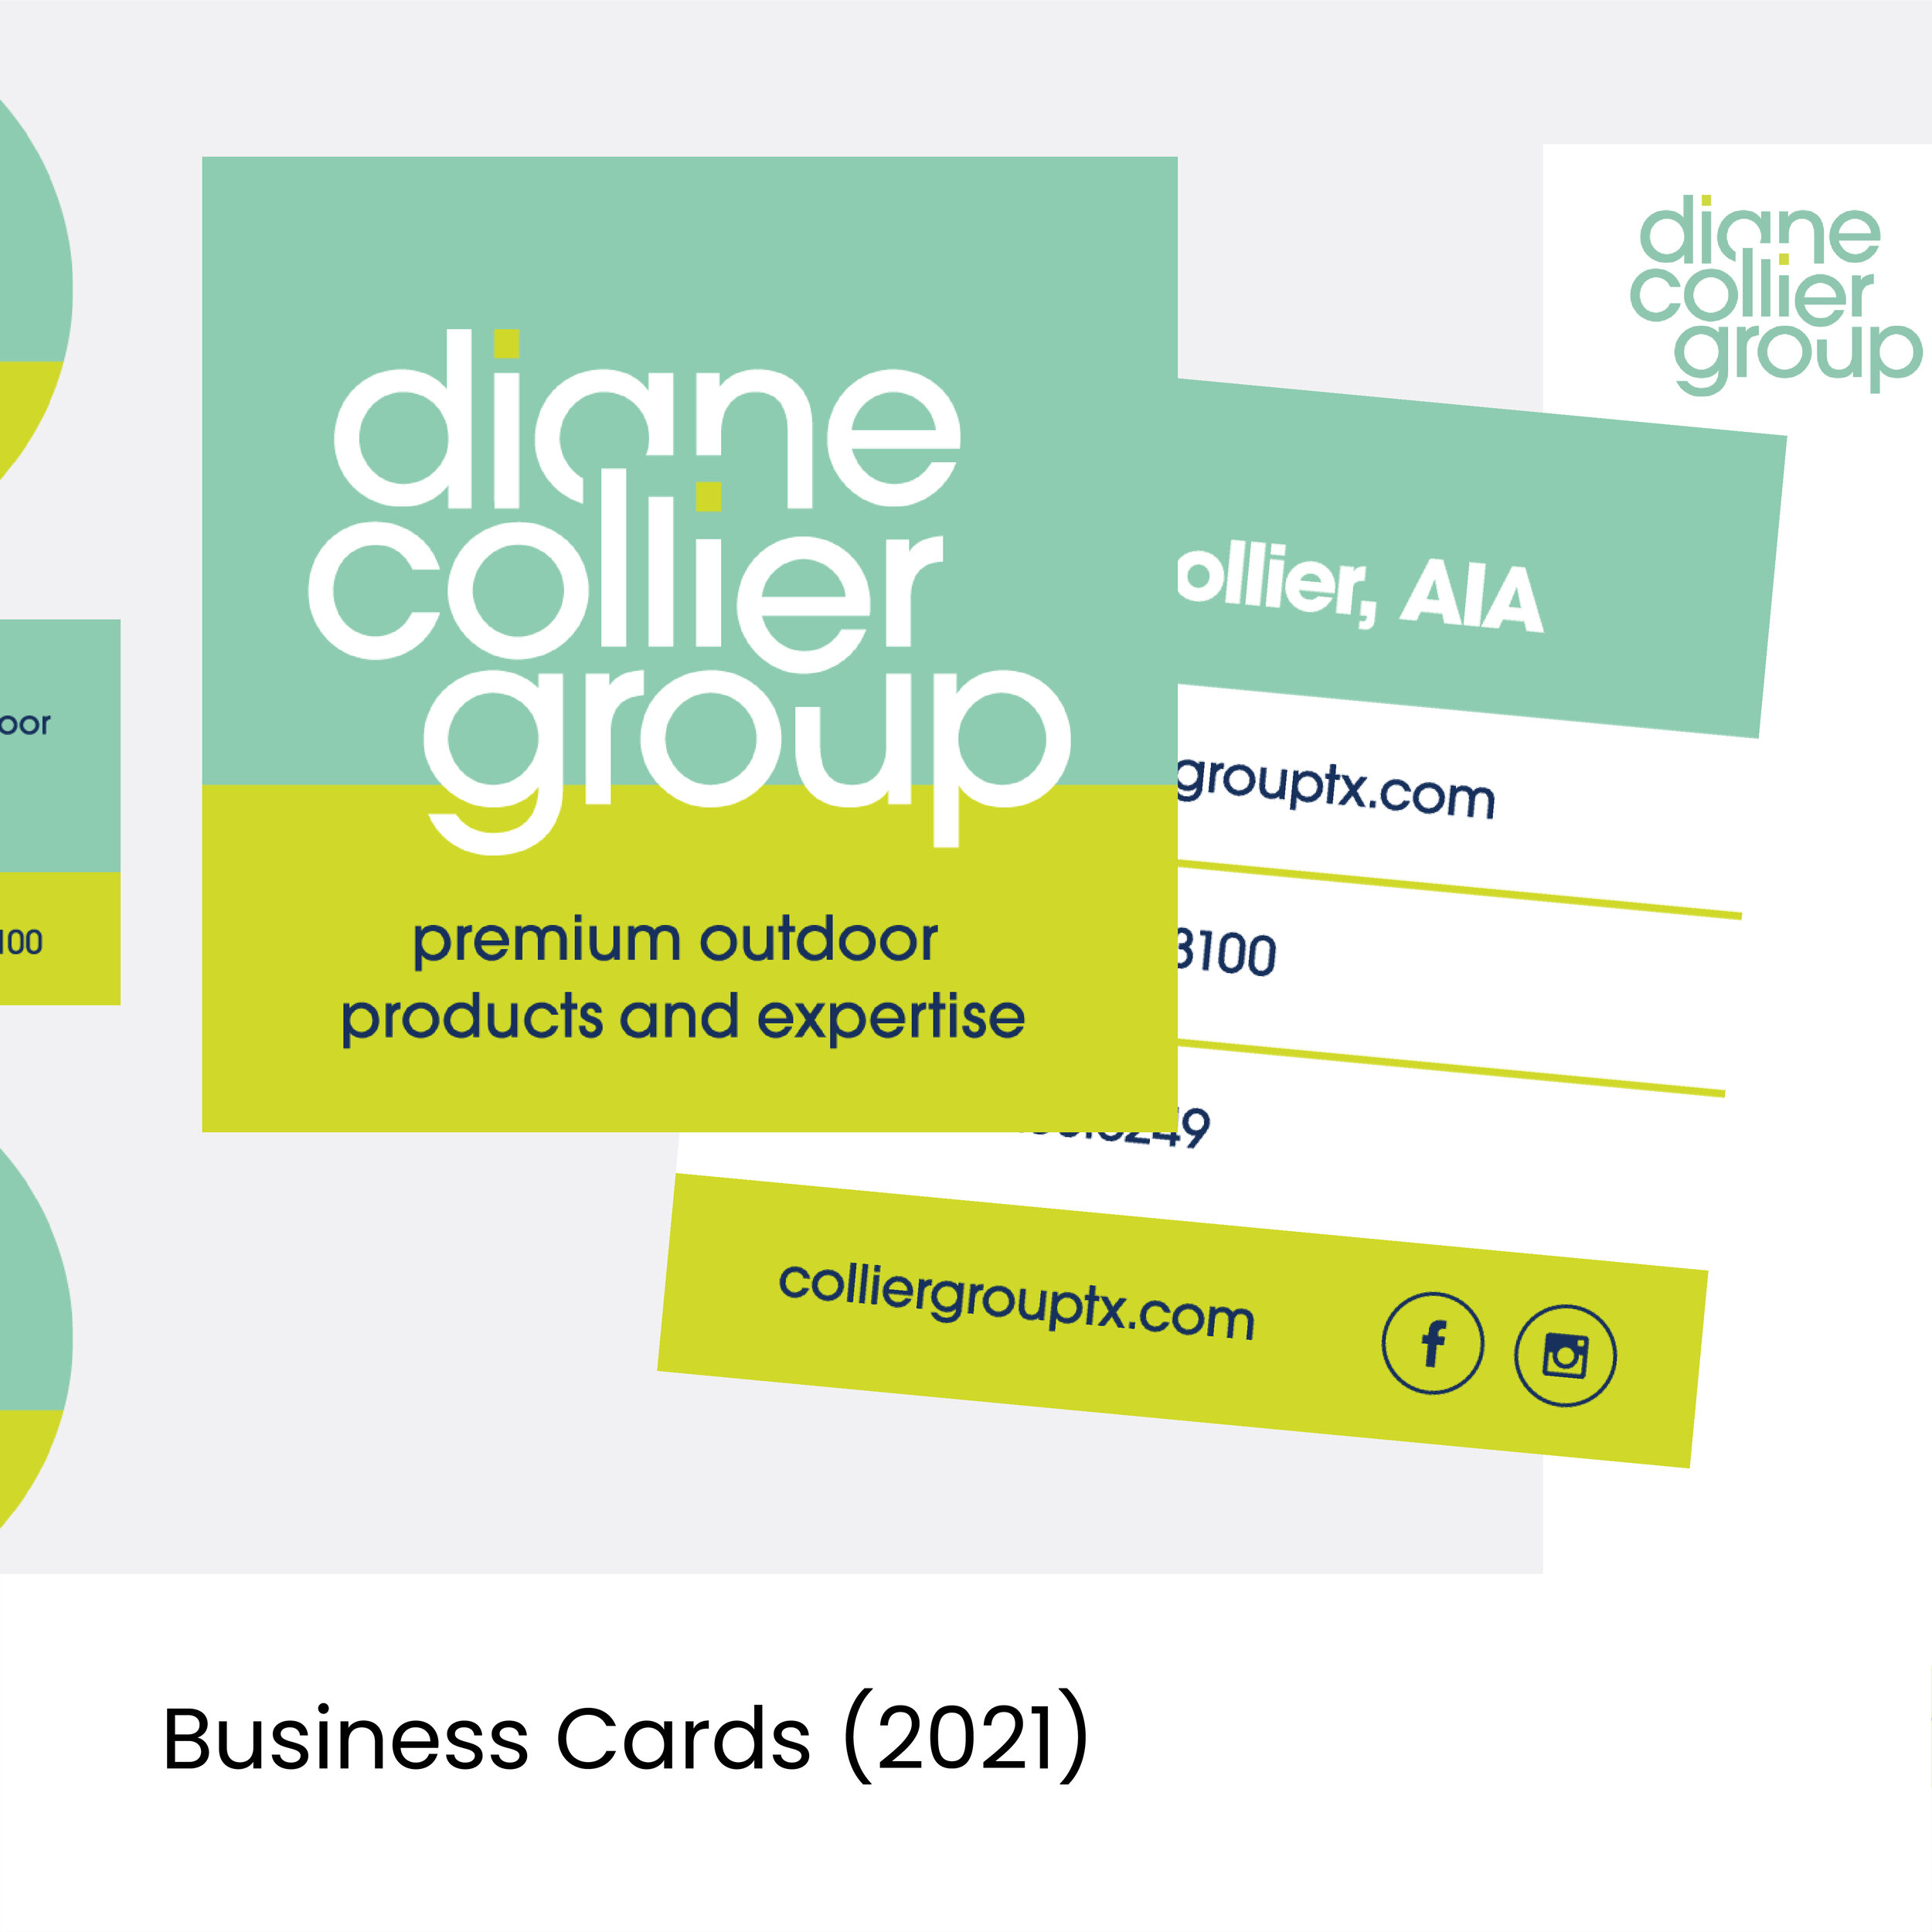 Diane Collier Group Brand Refesh_5.jpg